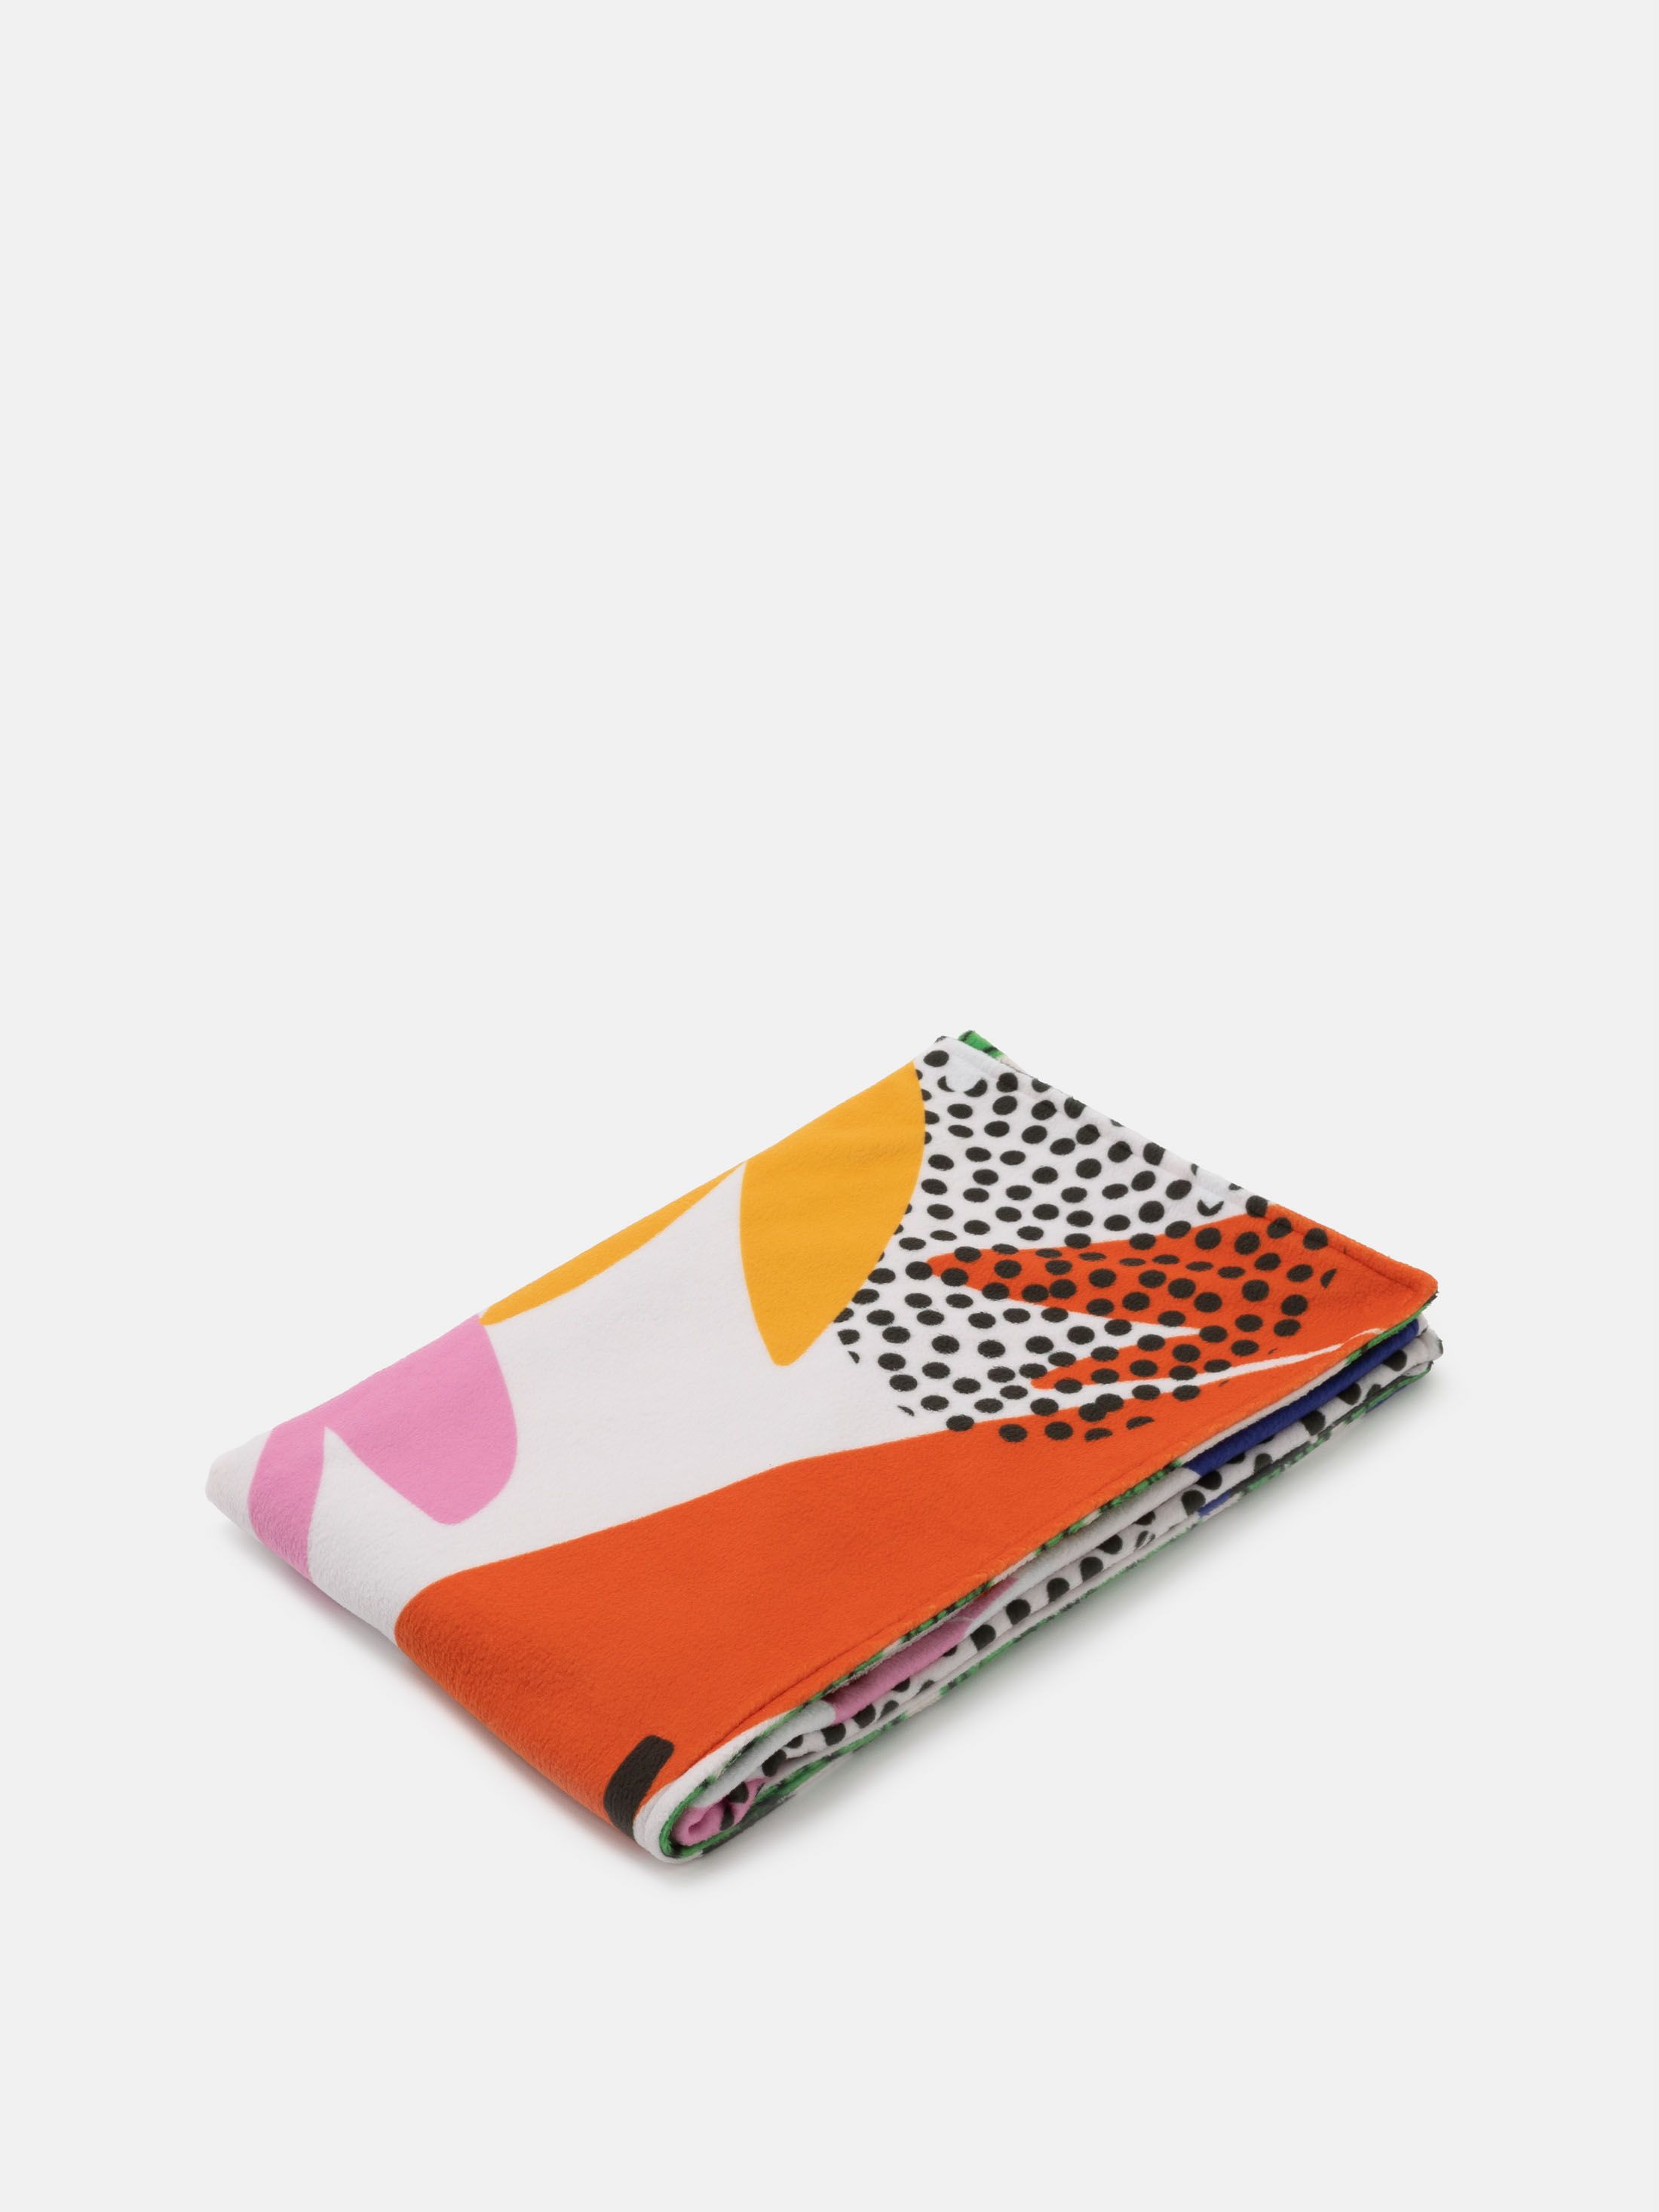 comfort blanket for babies printed with orange design